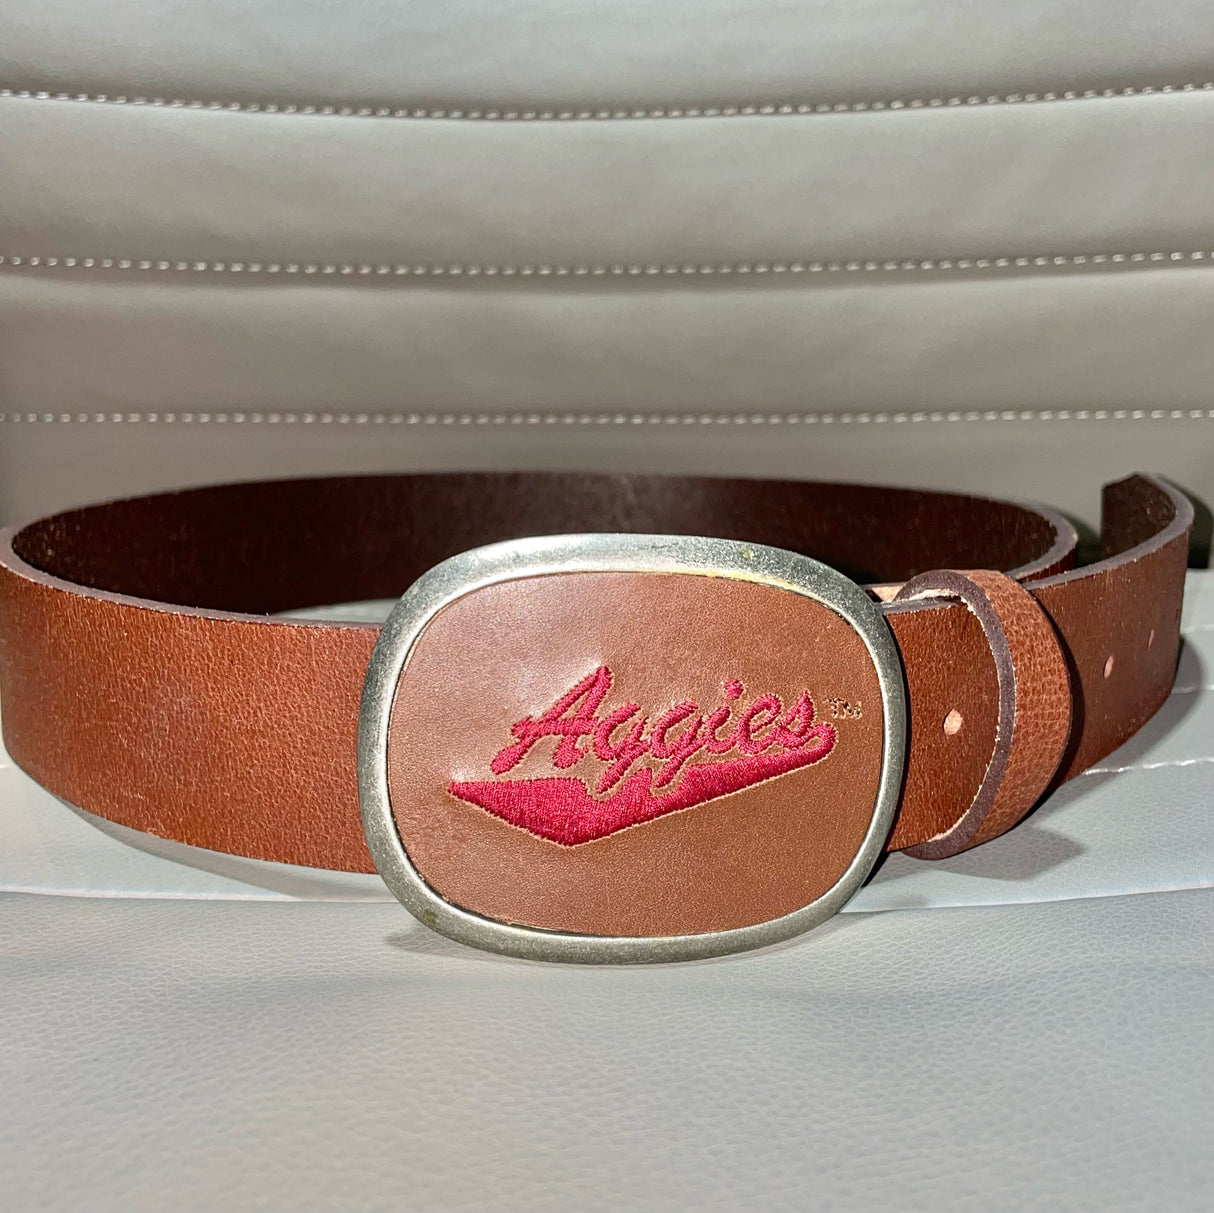 Aggies Leather Belt